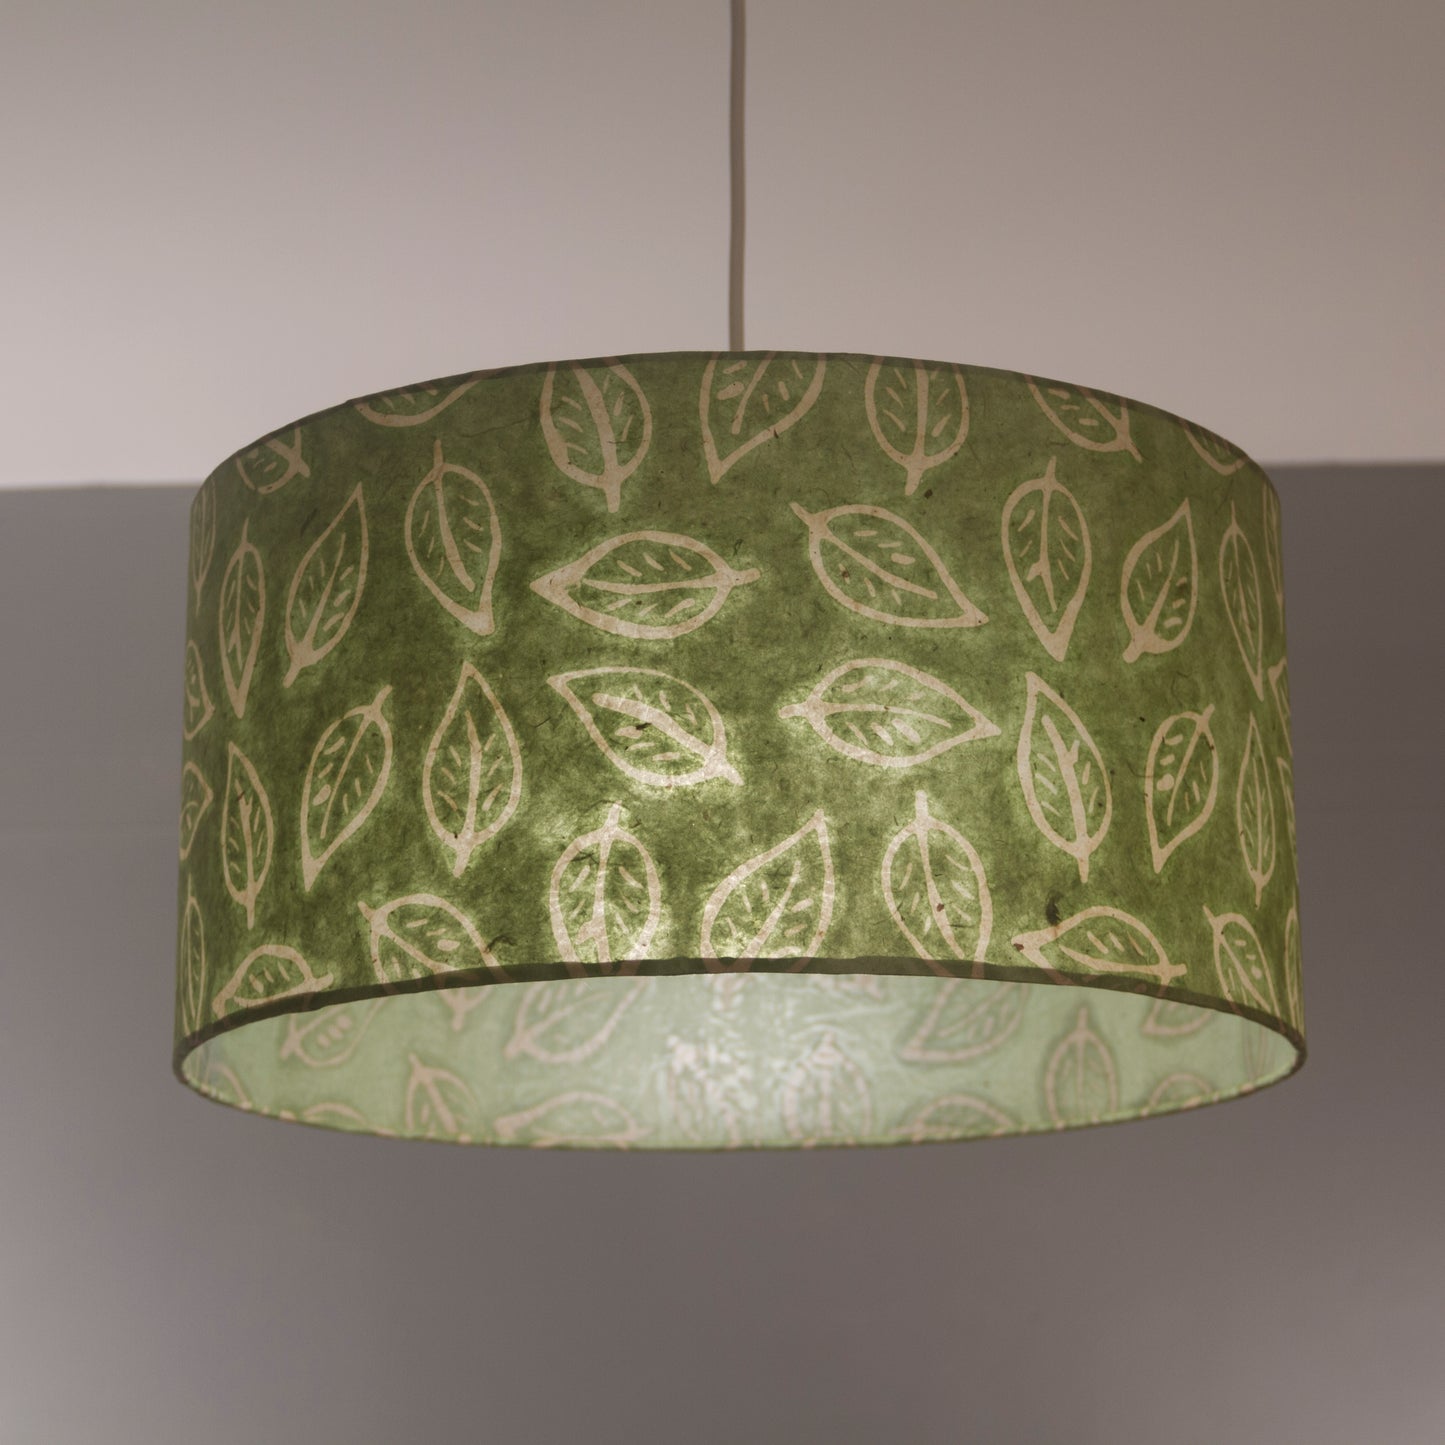 Rectangle Lamp Shade - P29 - Batik Leaf on Green, 50cm(w) x 25cm(h) x 25cm(d)